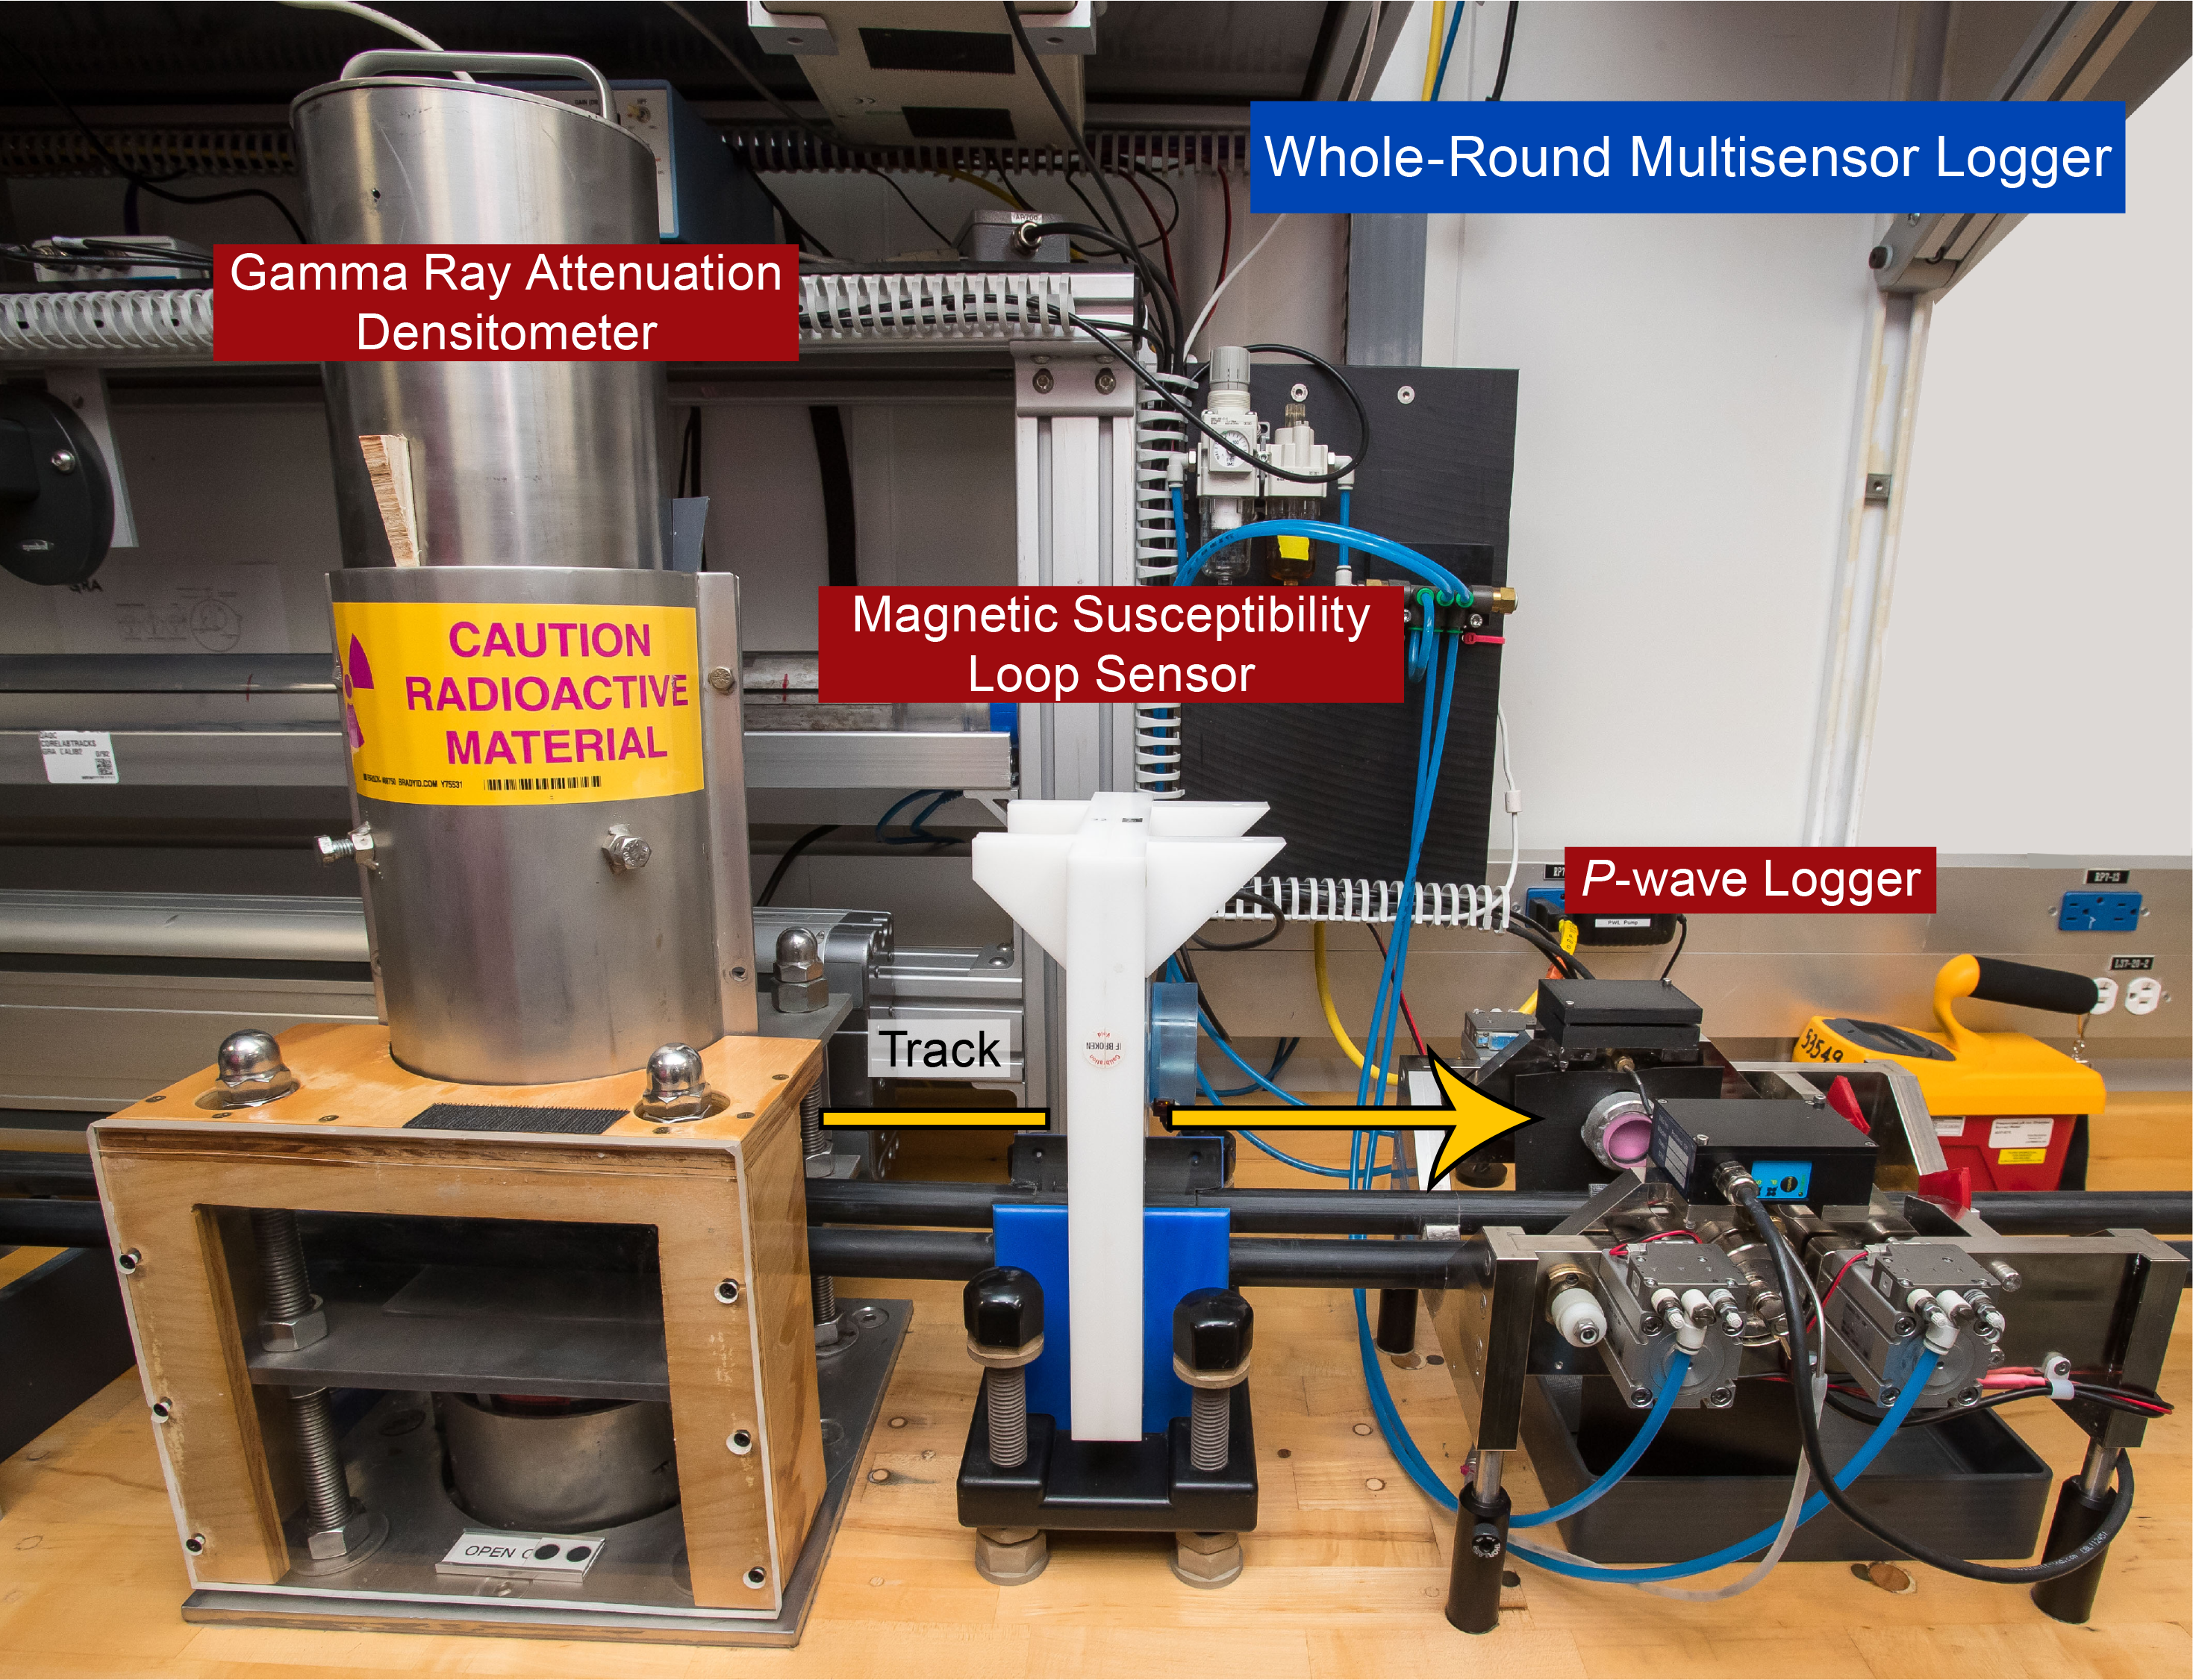 Microscope Slides Stand Rest Rack Holder Dryer Lab Bench Display 2x Pair 